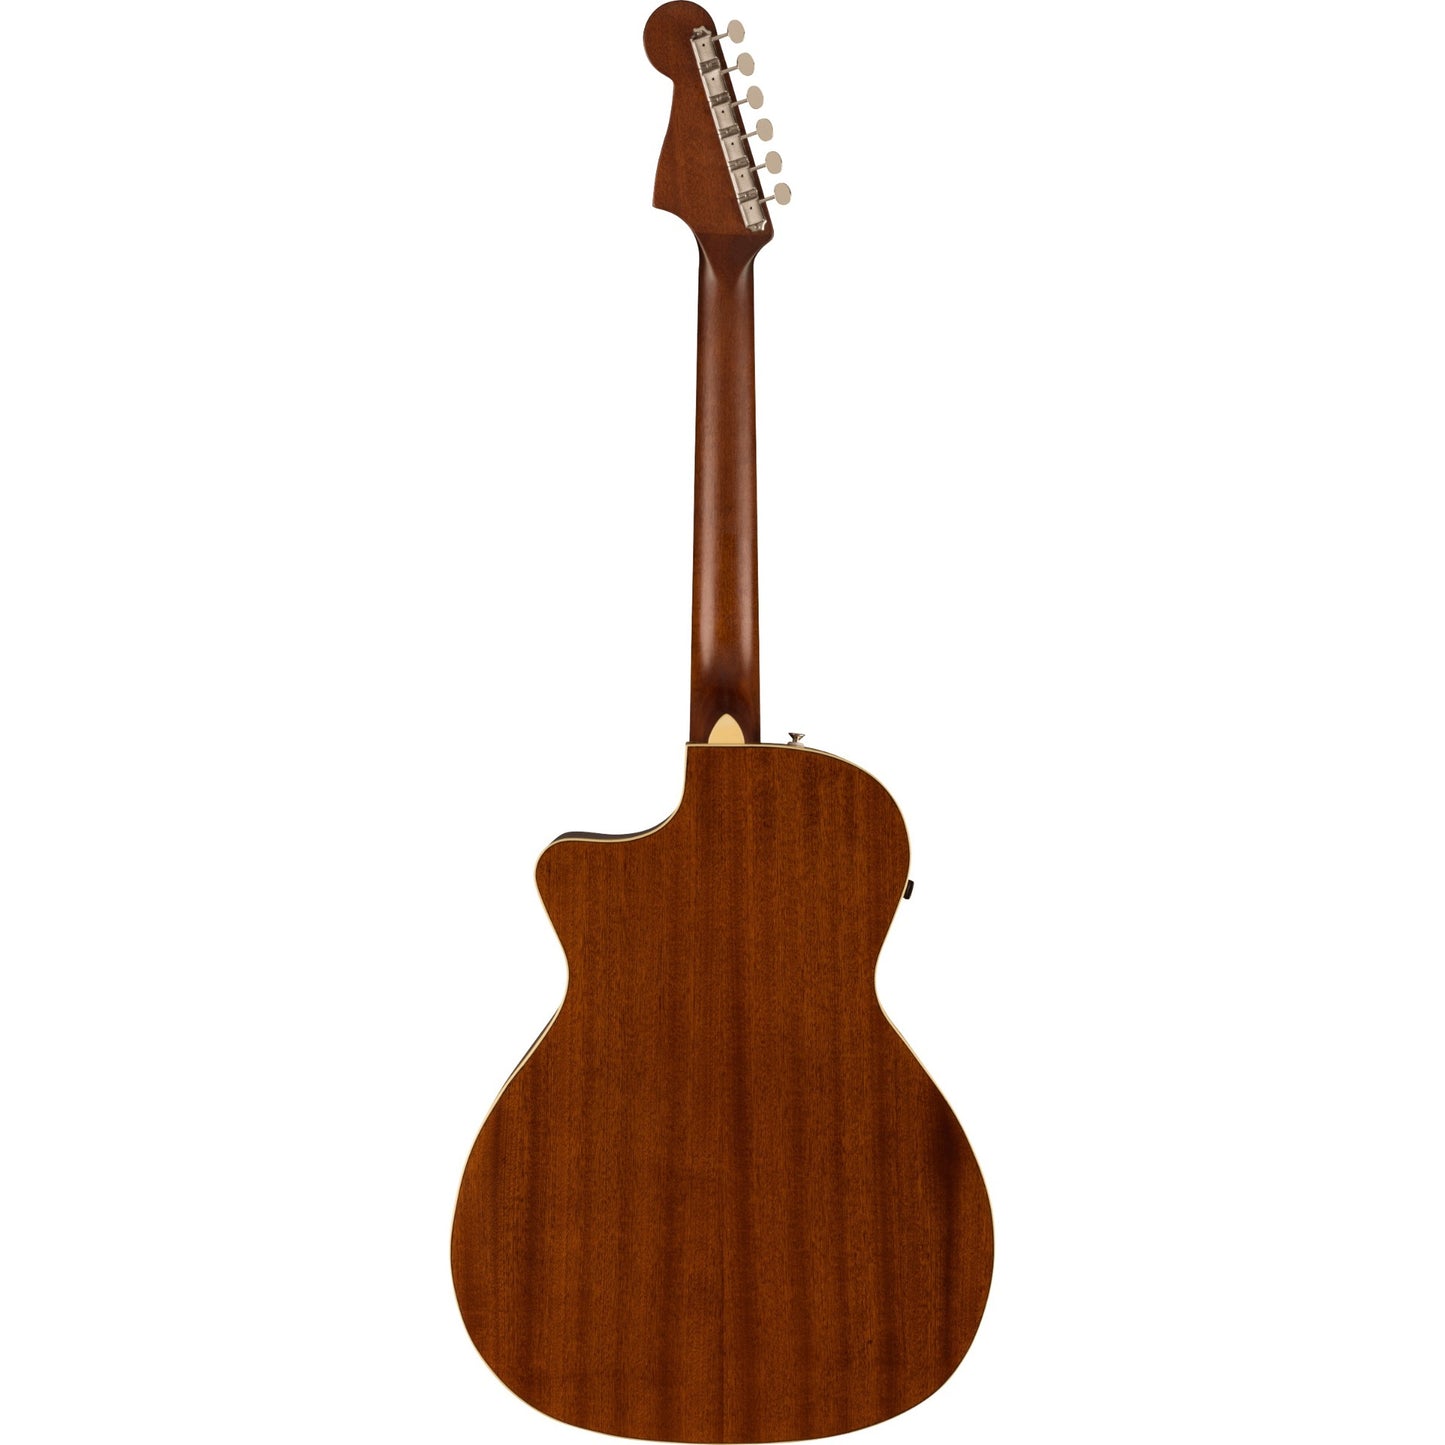 Fender Newporter Player Acoustic Electric Guitar - Natural, Walnut Fingerboard